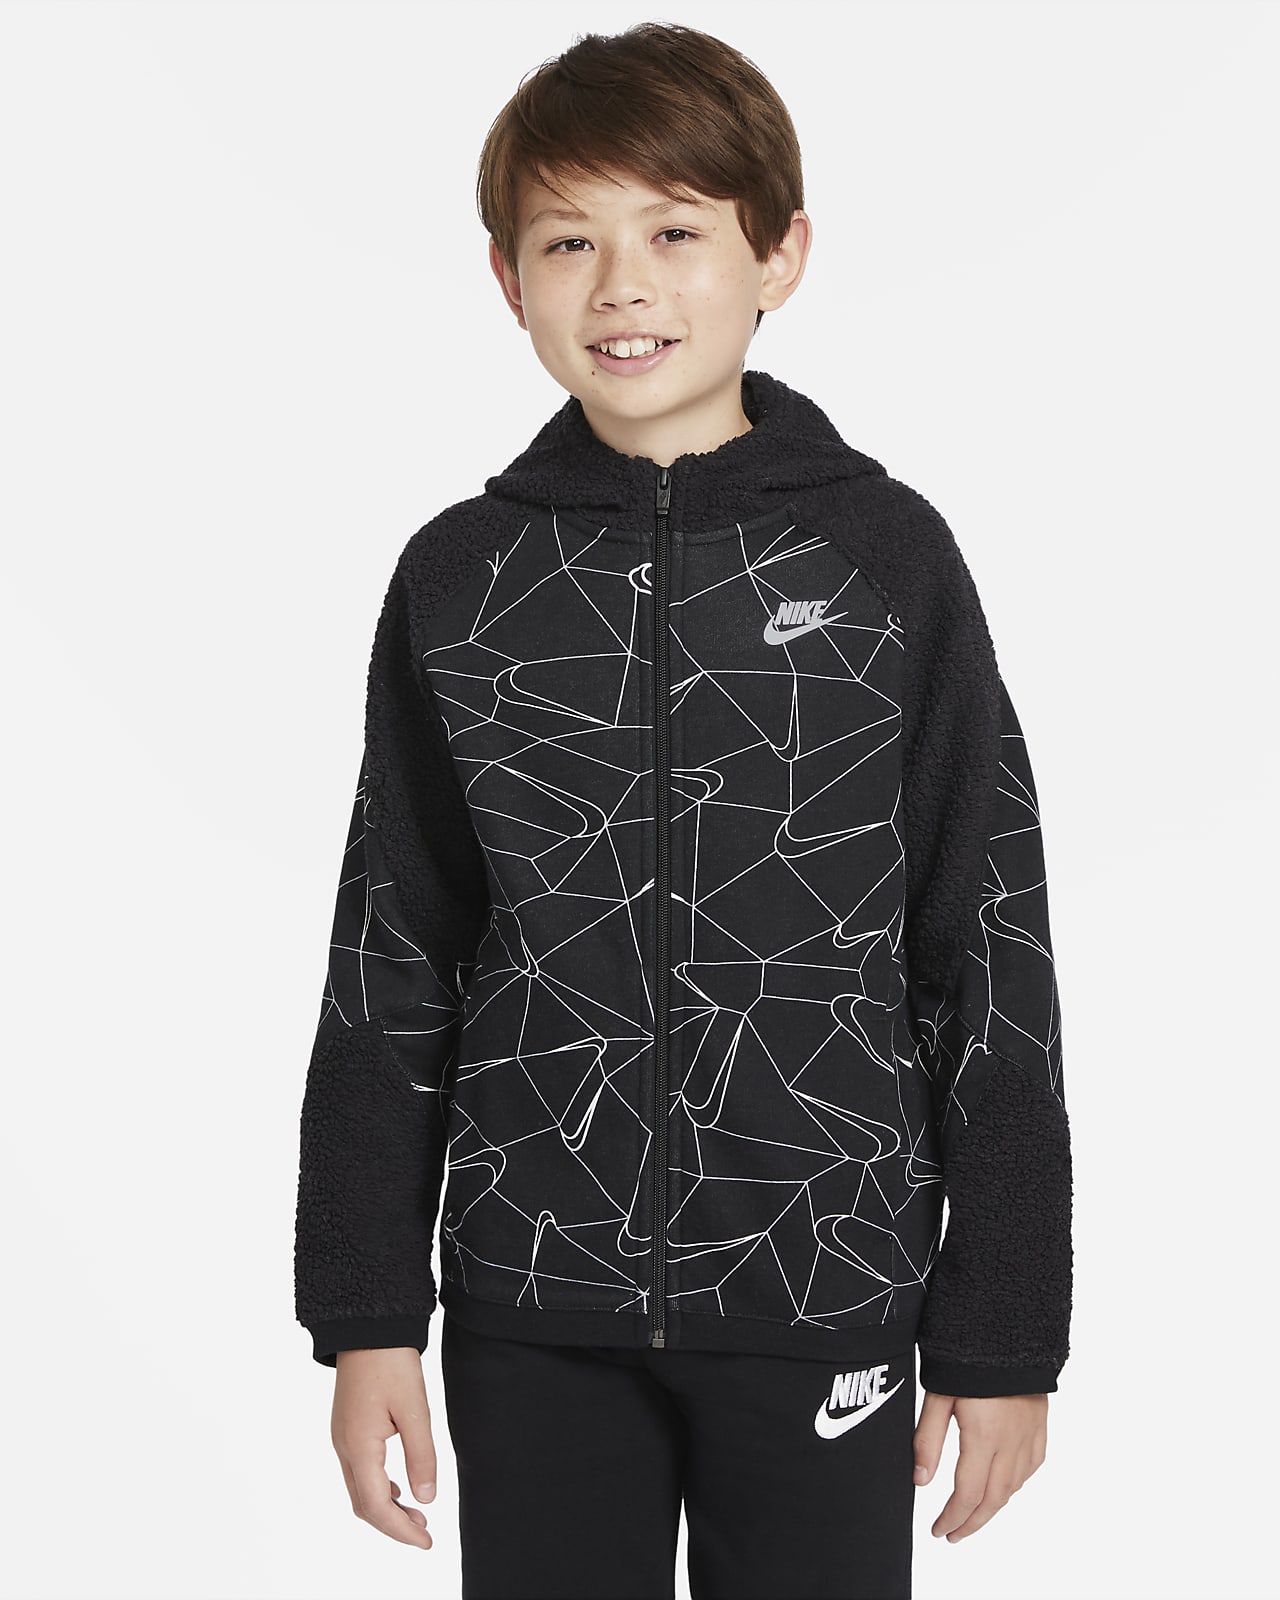 Зимняя худи с молнией во всю длину для мальчиков школьного возраста Nike Sportswear Club